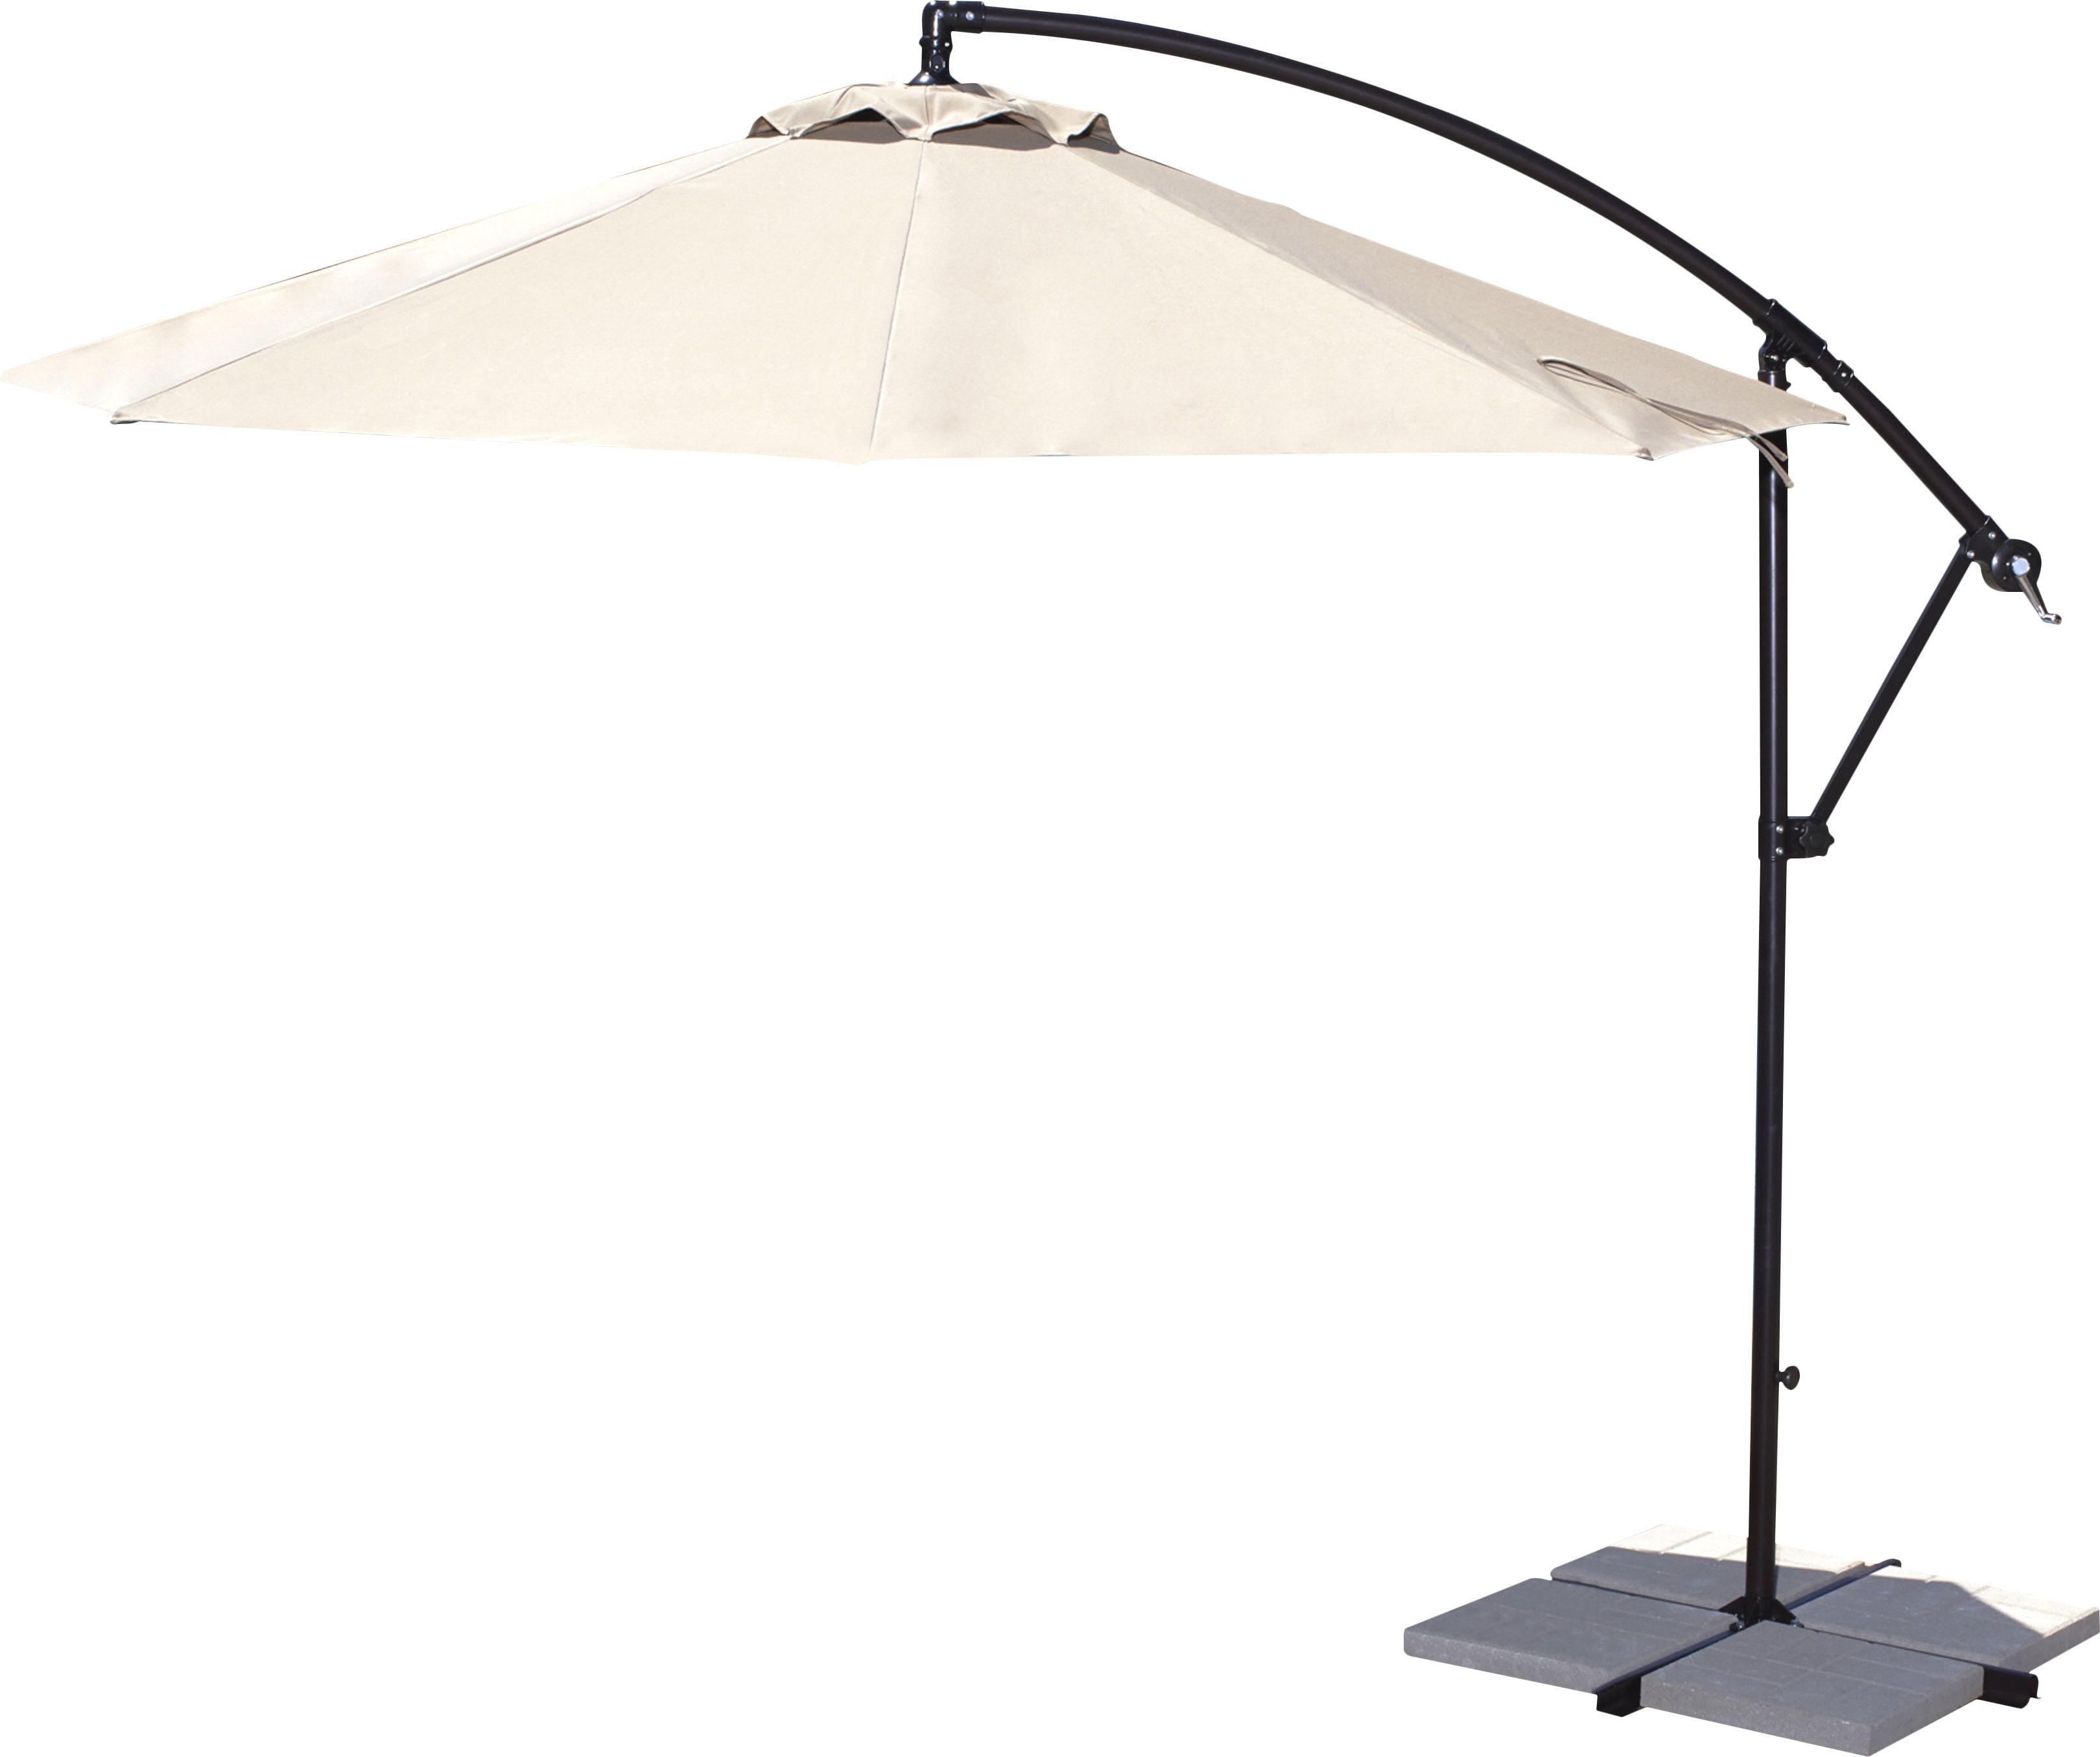 2020 Ketcham 10' Cantilever Umbrella With Anna Cantilever Umbrellas (View 20 of 20)